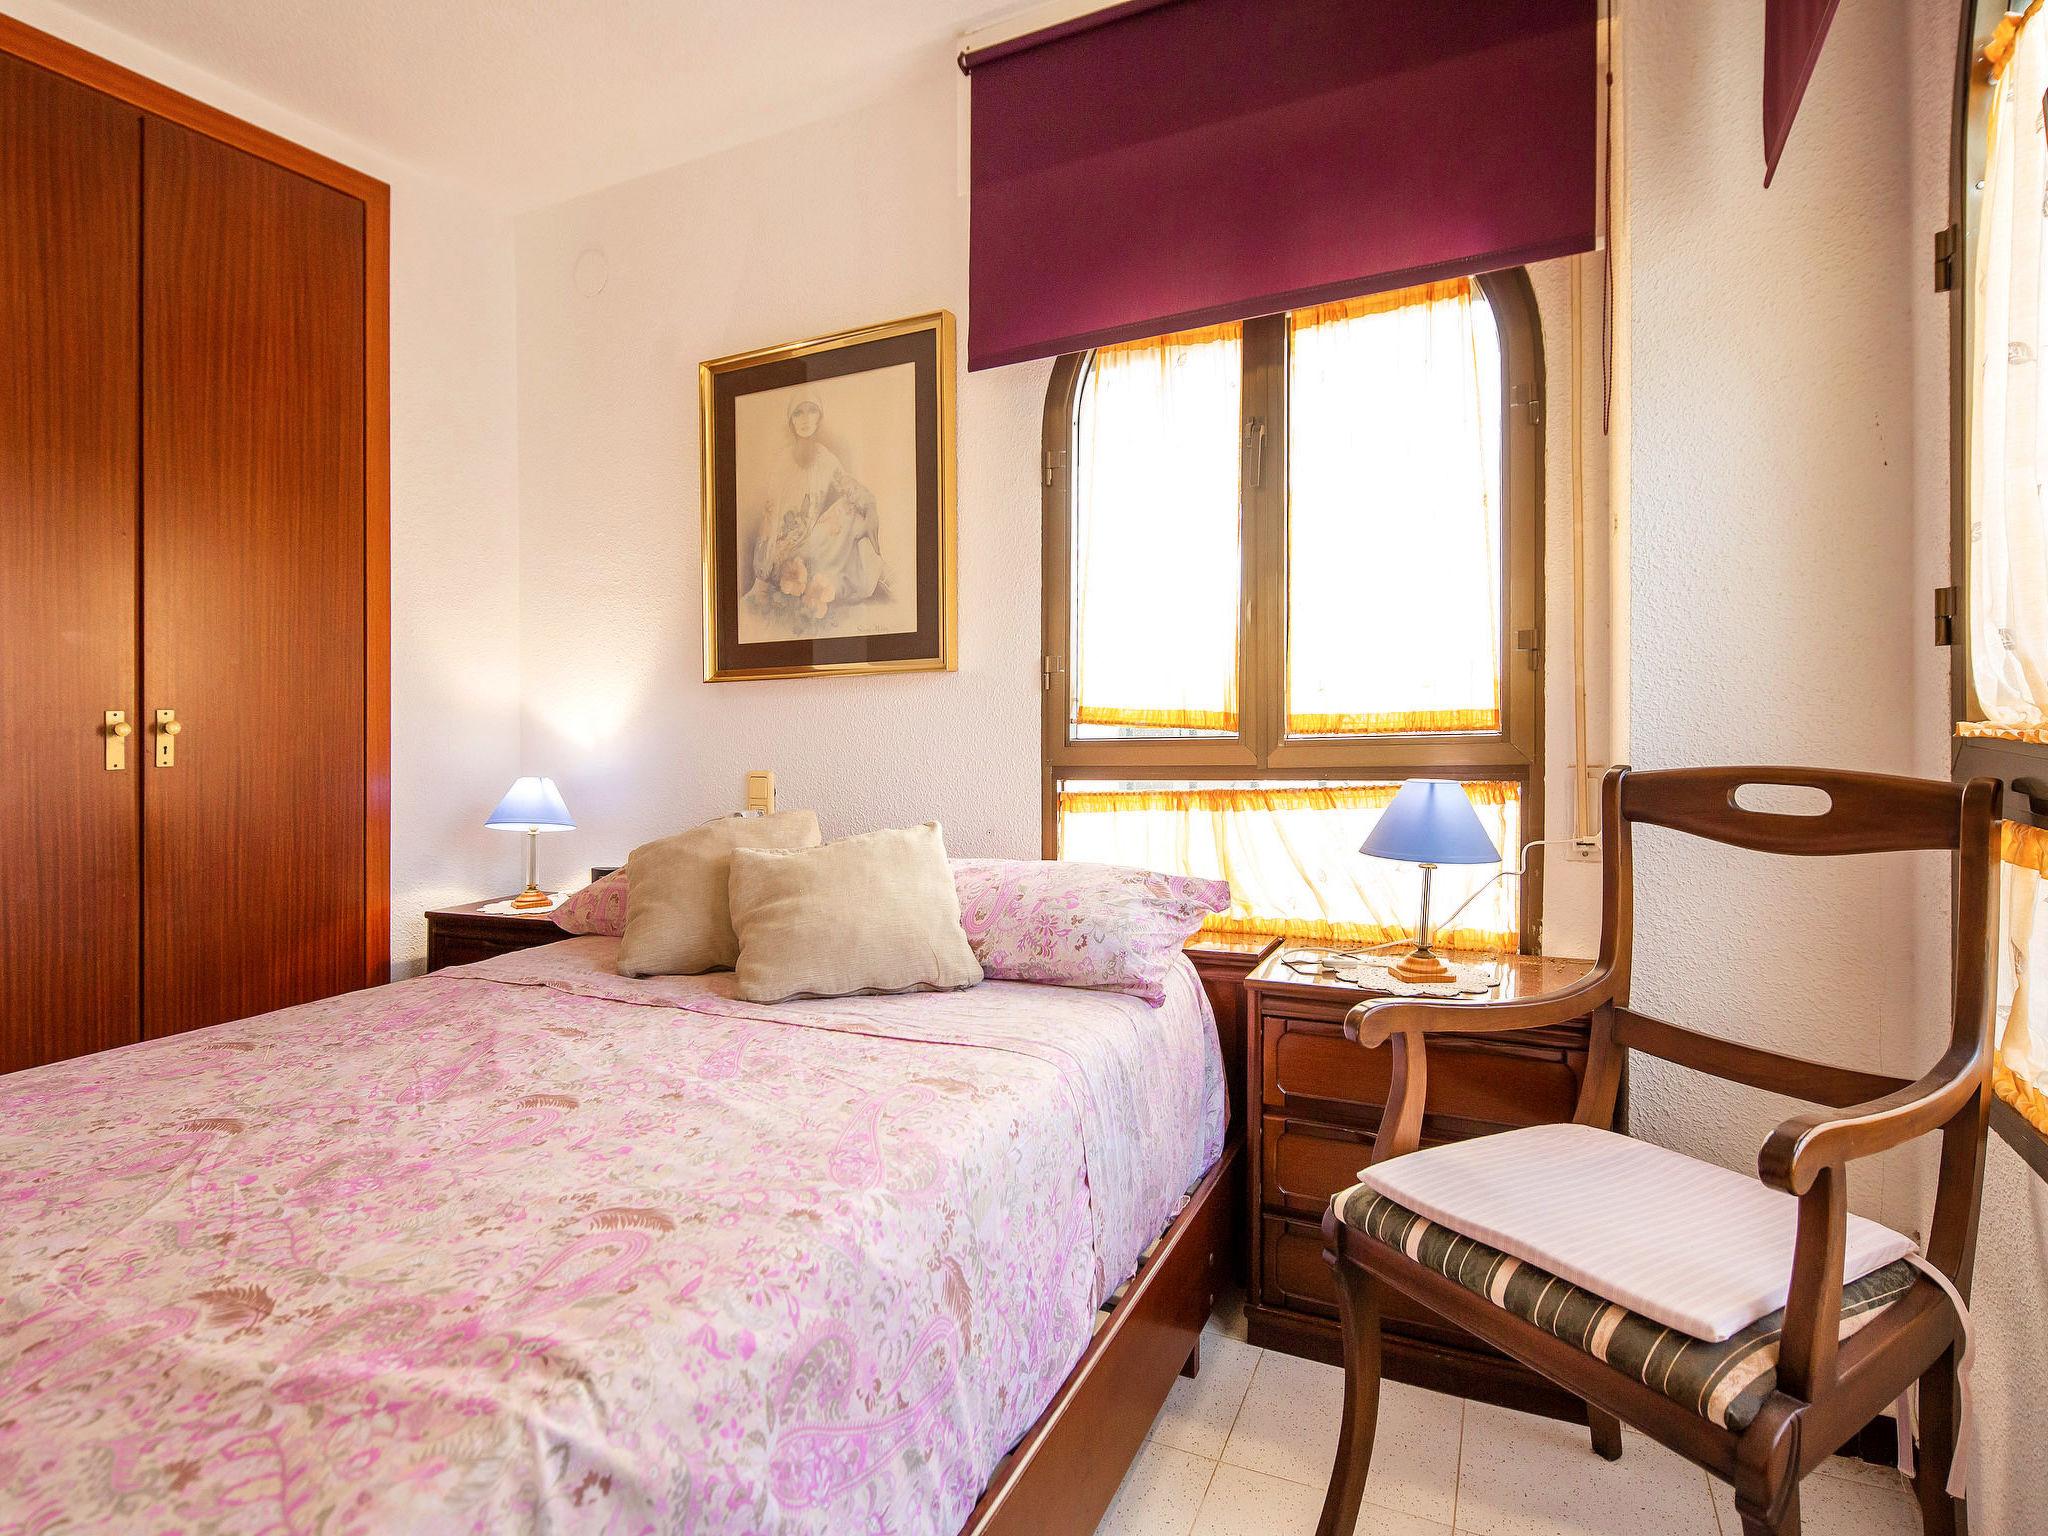 Photo 9 - Appartement de 2 chambres à Oropesa del Mar avec jardin et vues à la mer